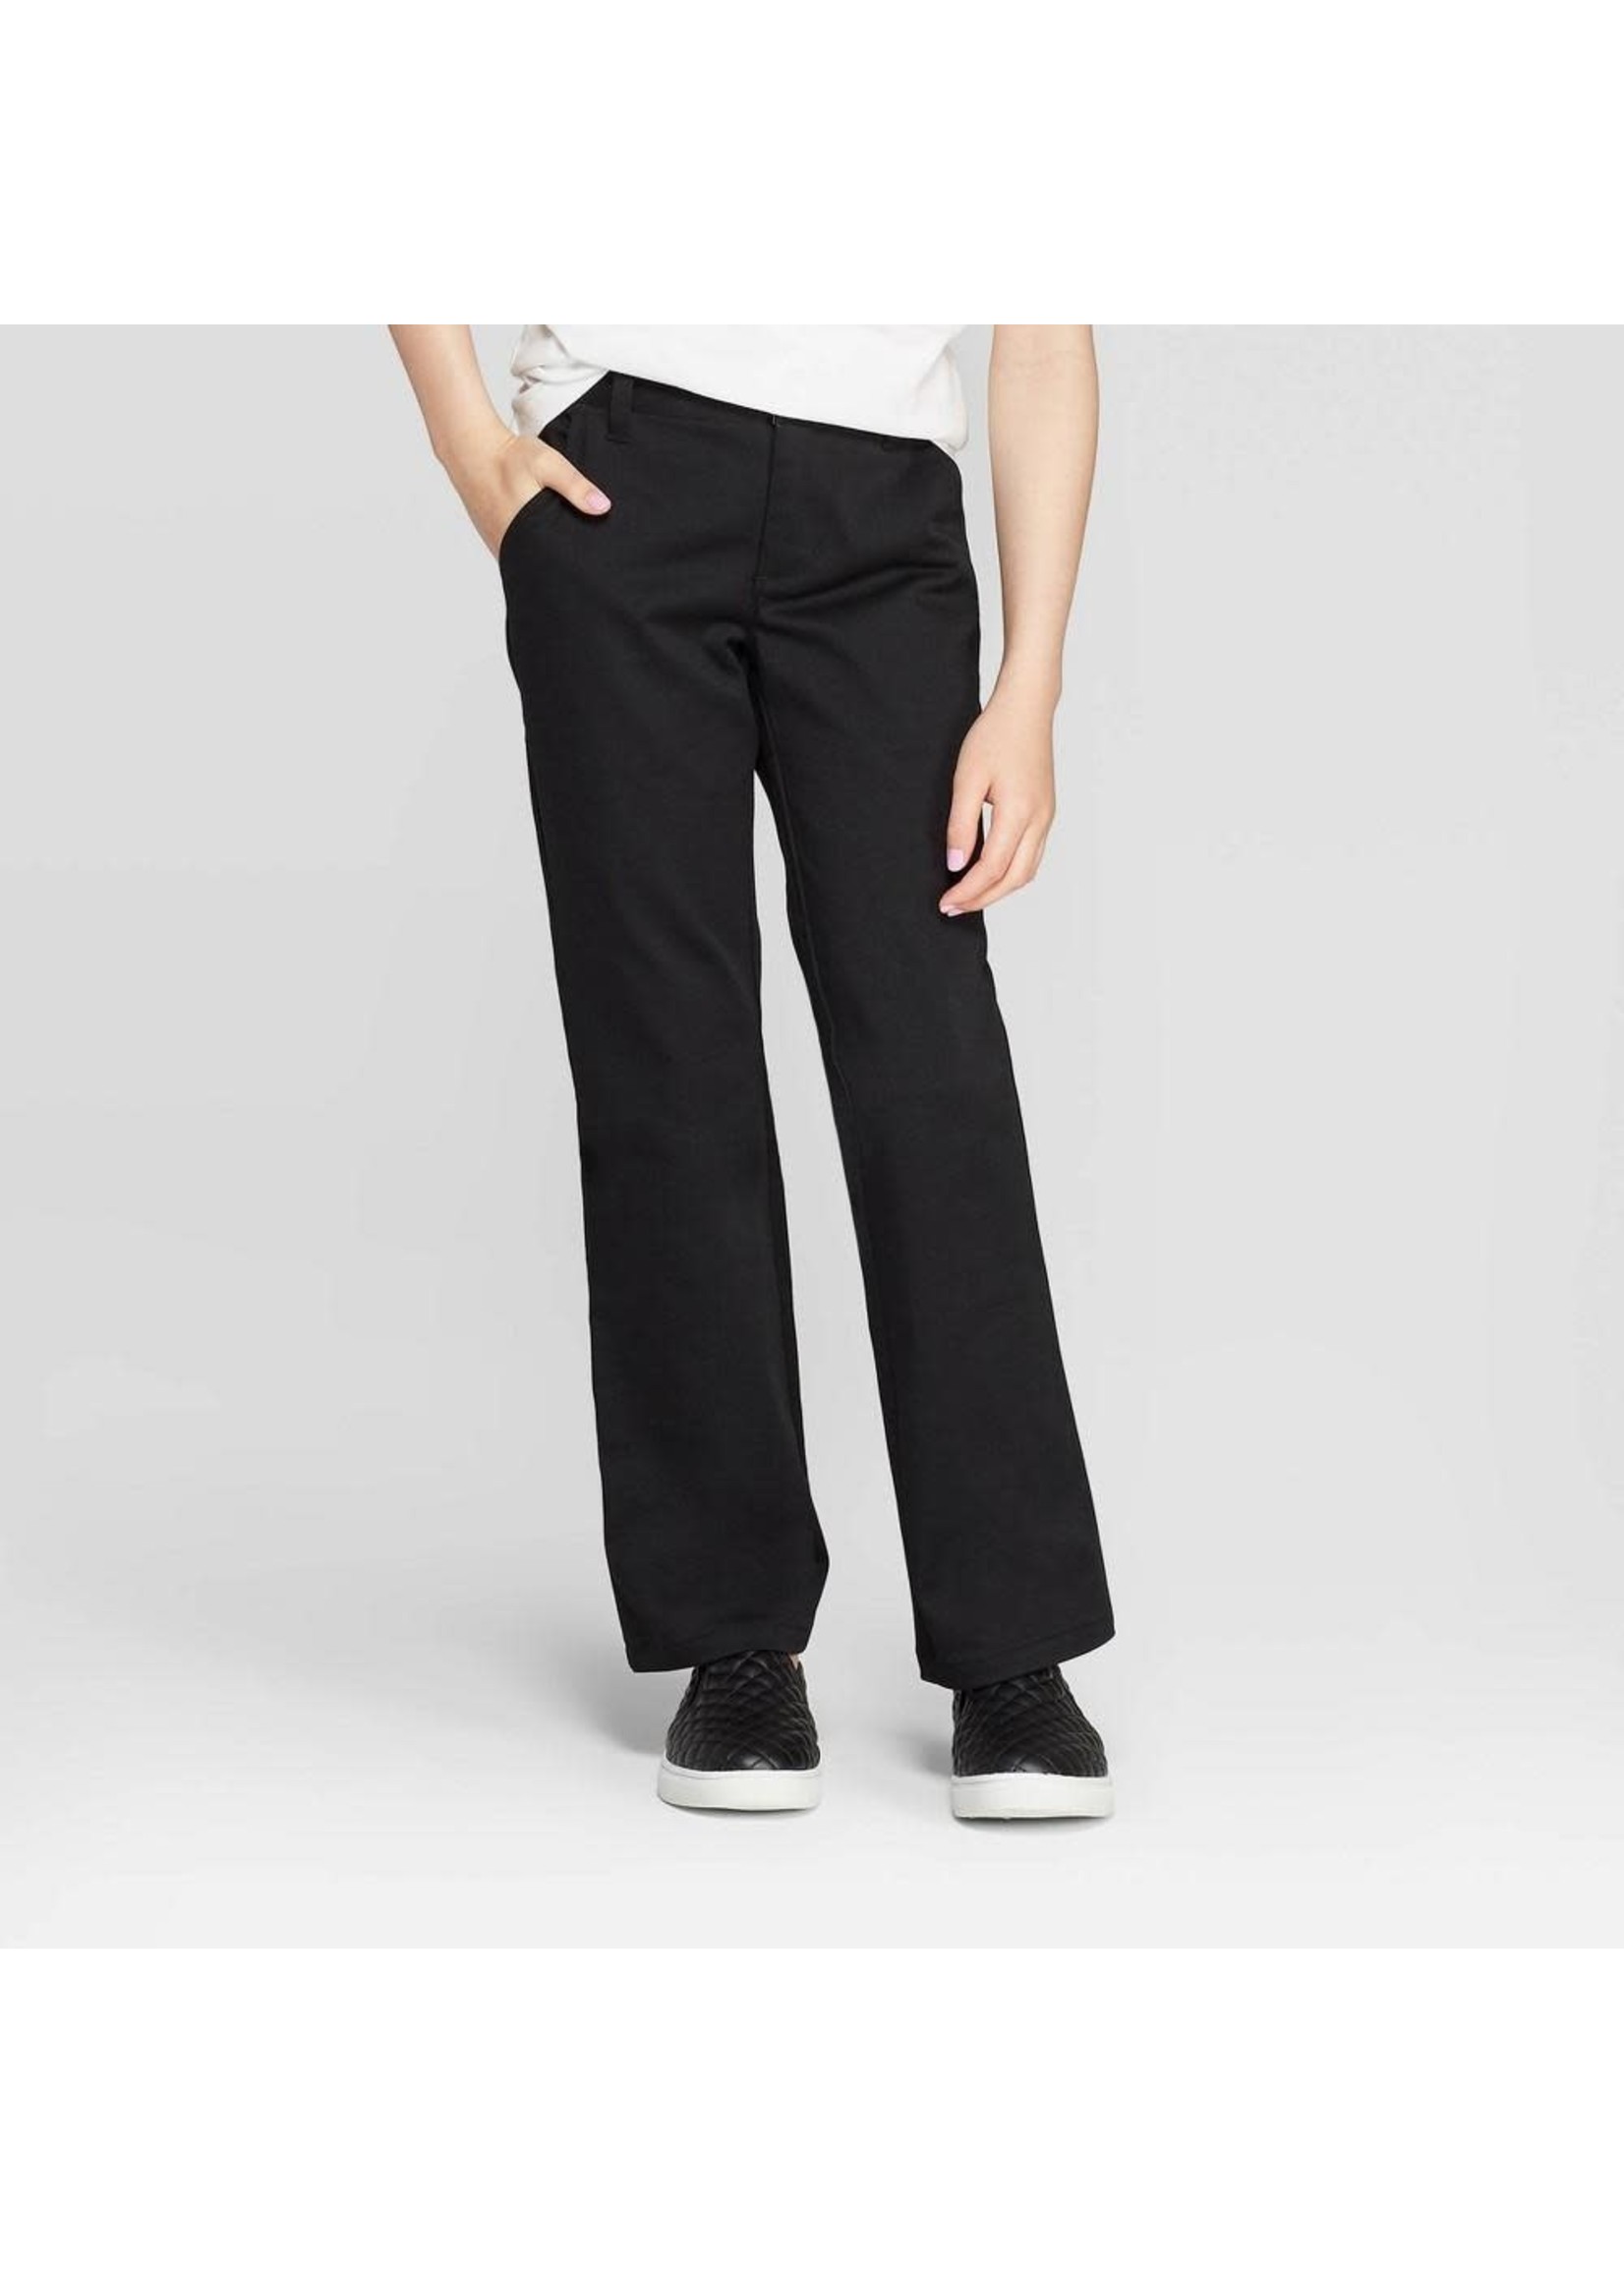 khaki bootcut uniform pants for schoolTikTok Search